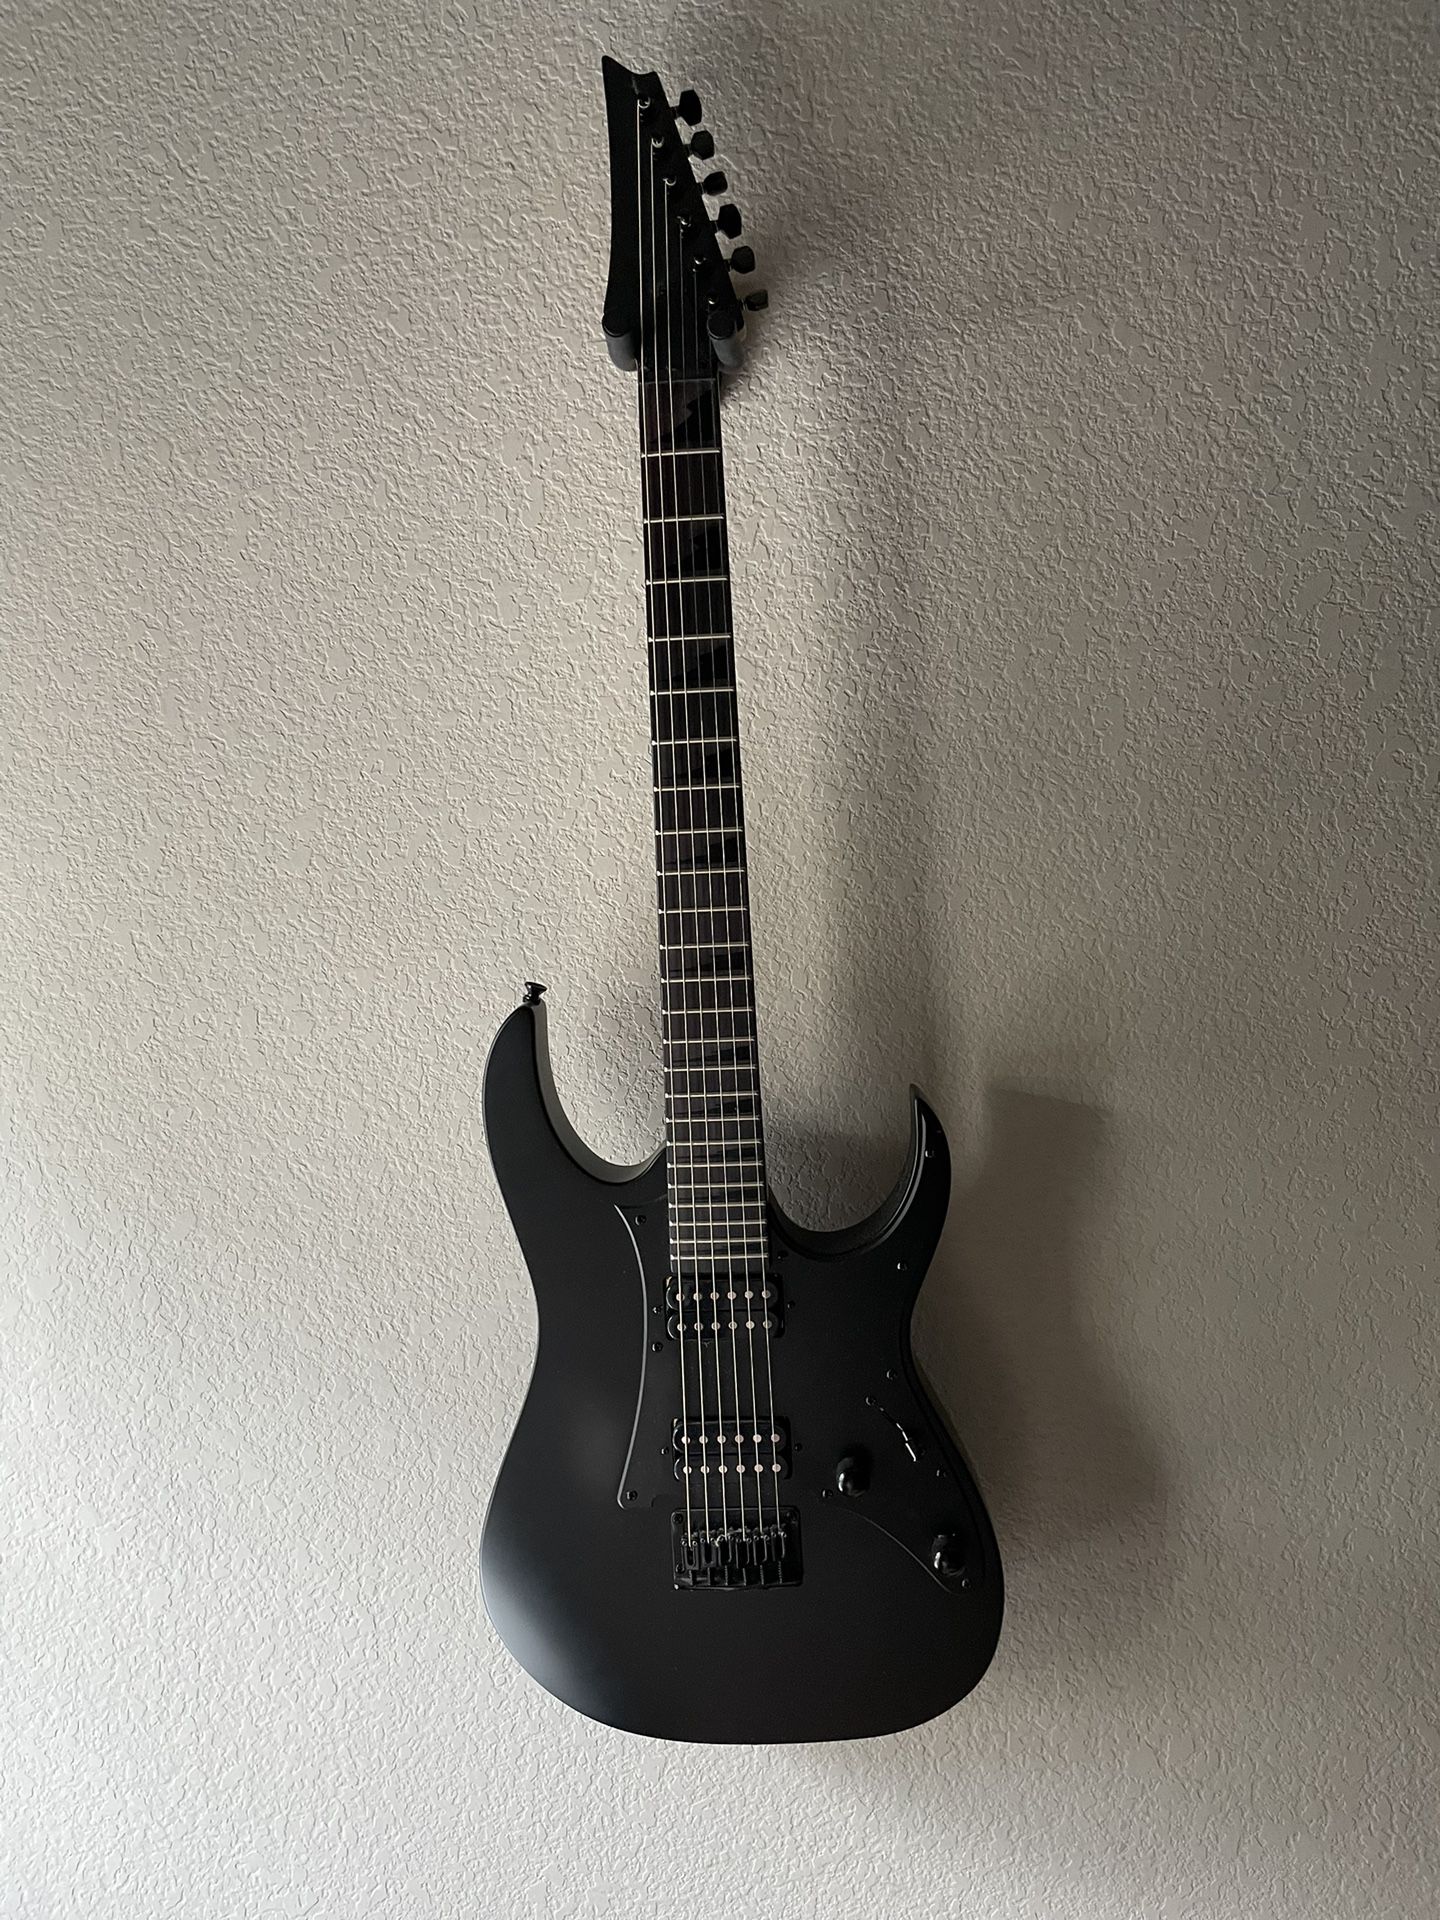 Black Ibanez Electric Guitar 